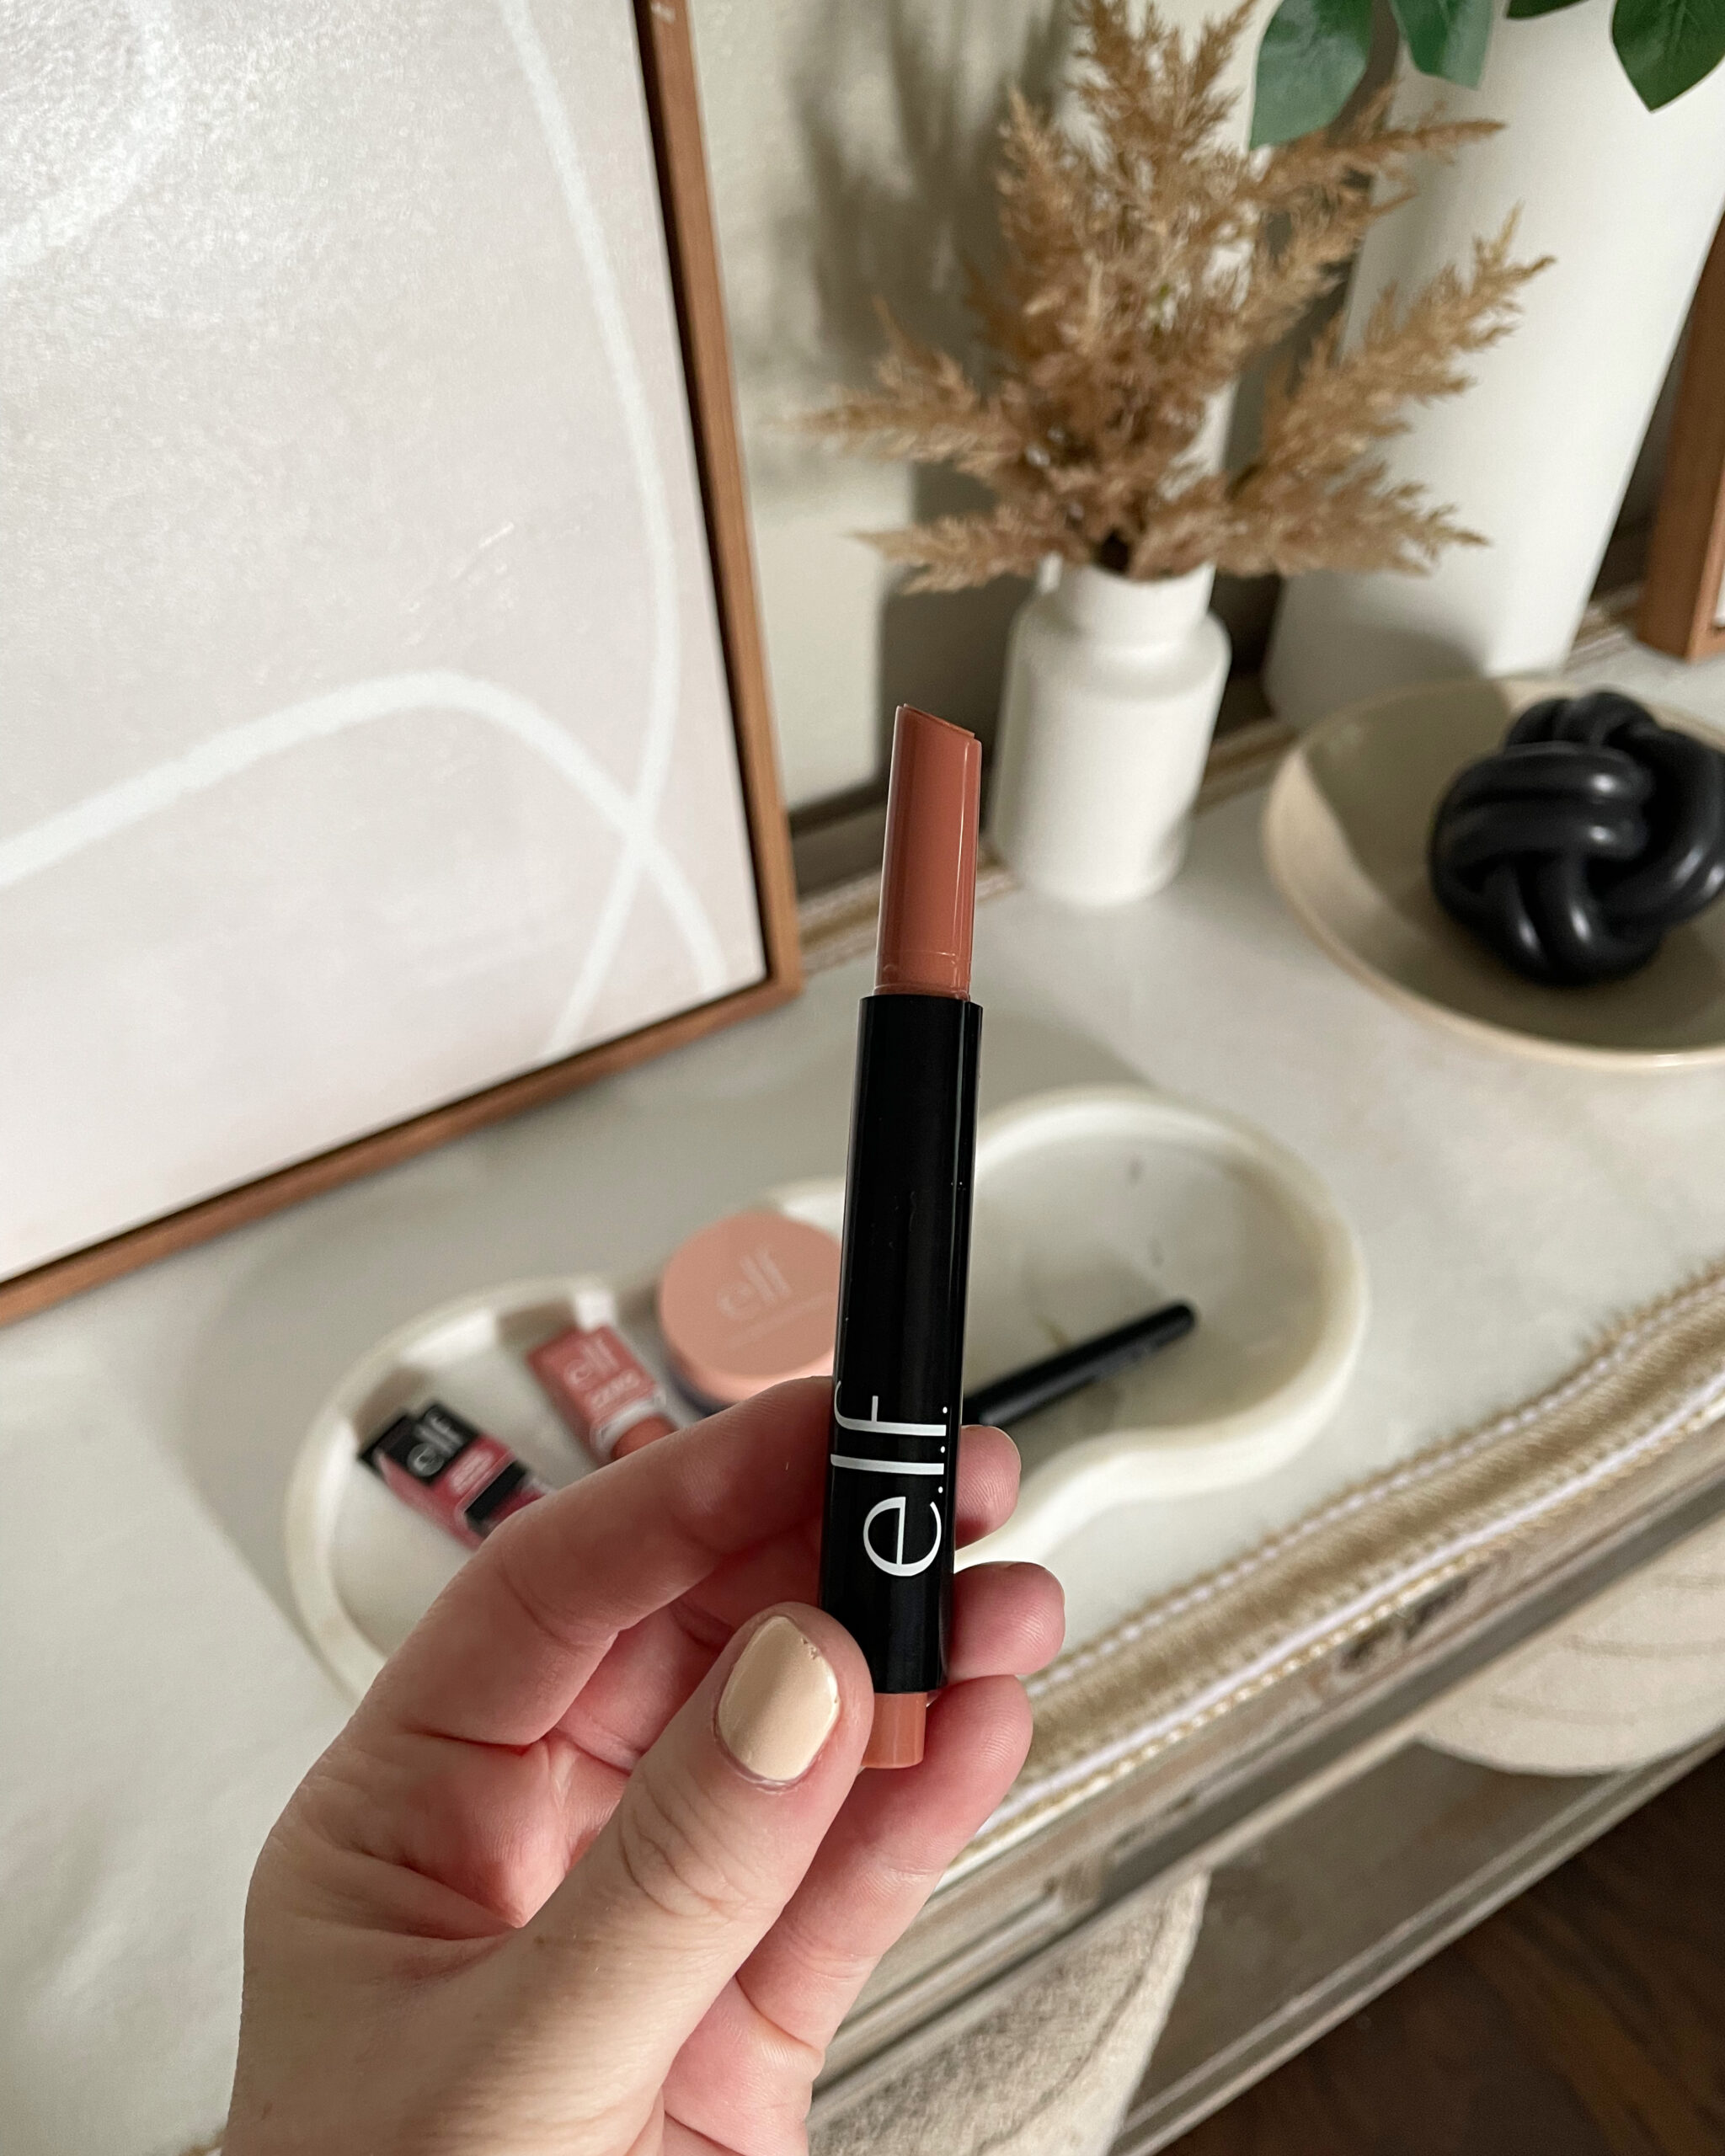 e.l.f. cosmetics Pout Clout Lip Plumping Pen Review | Affordable by Amanda